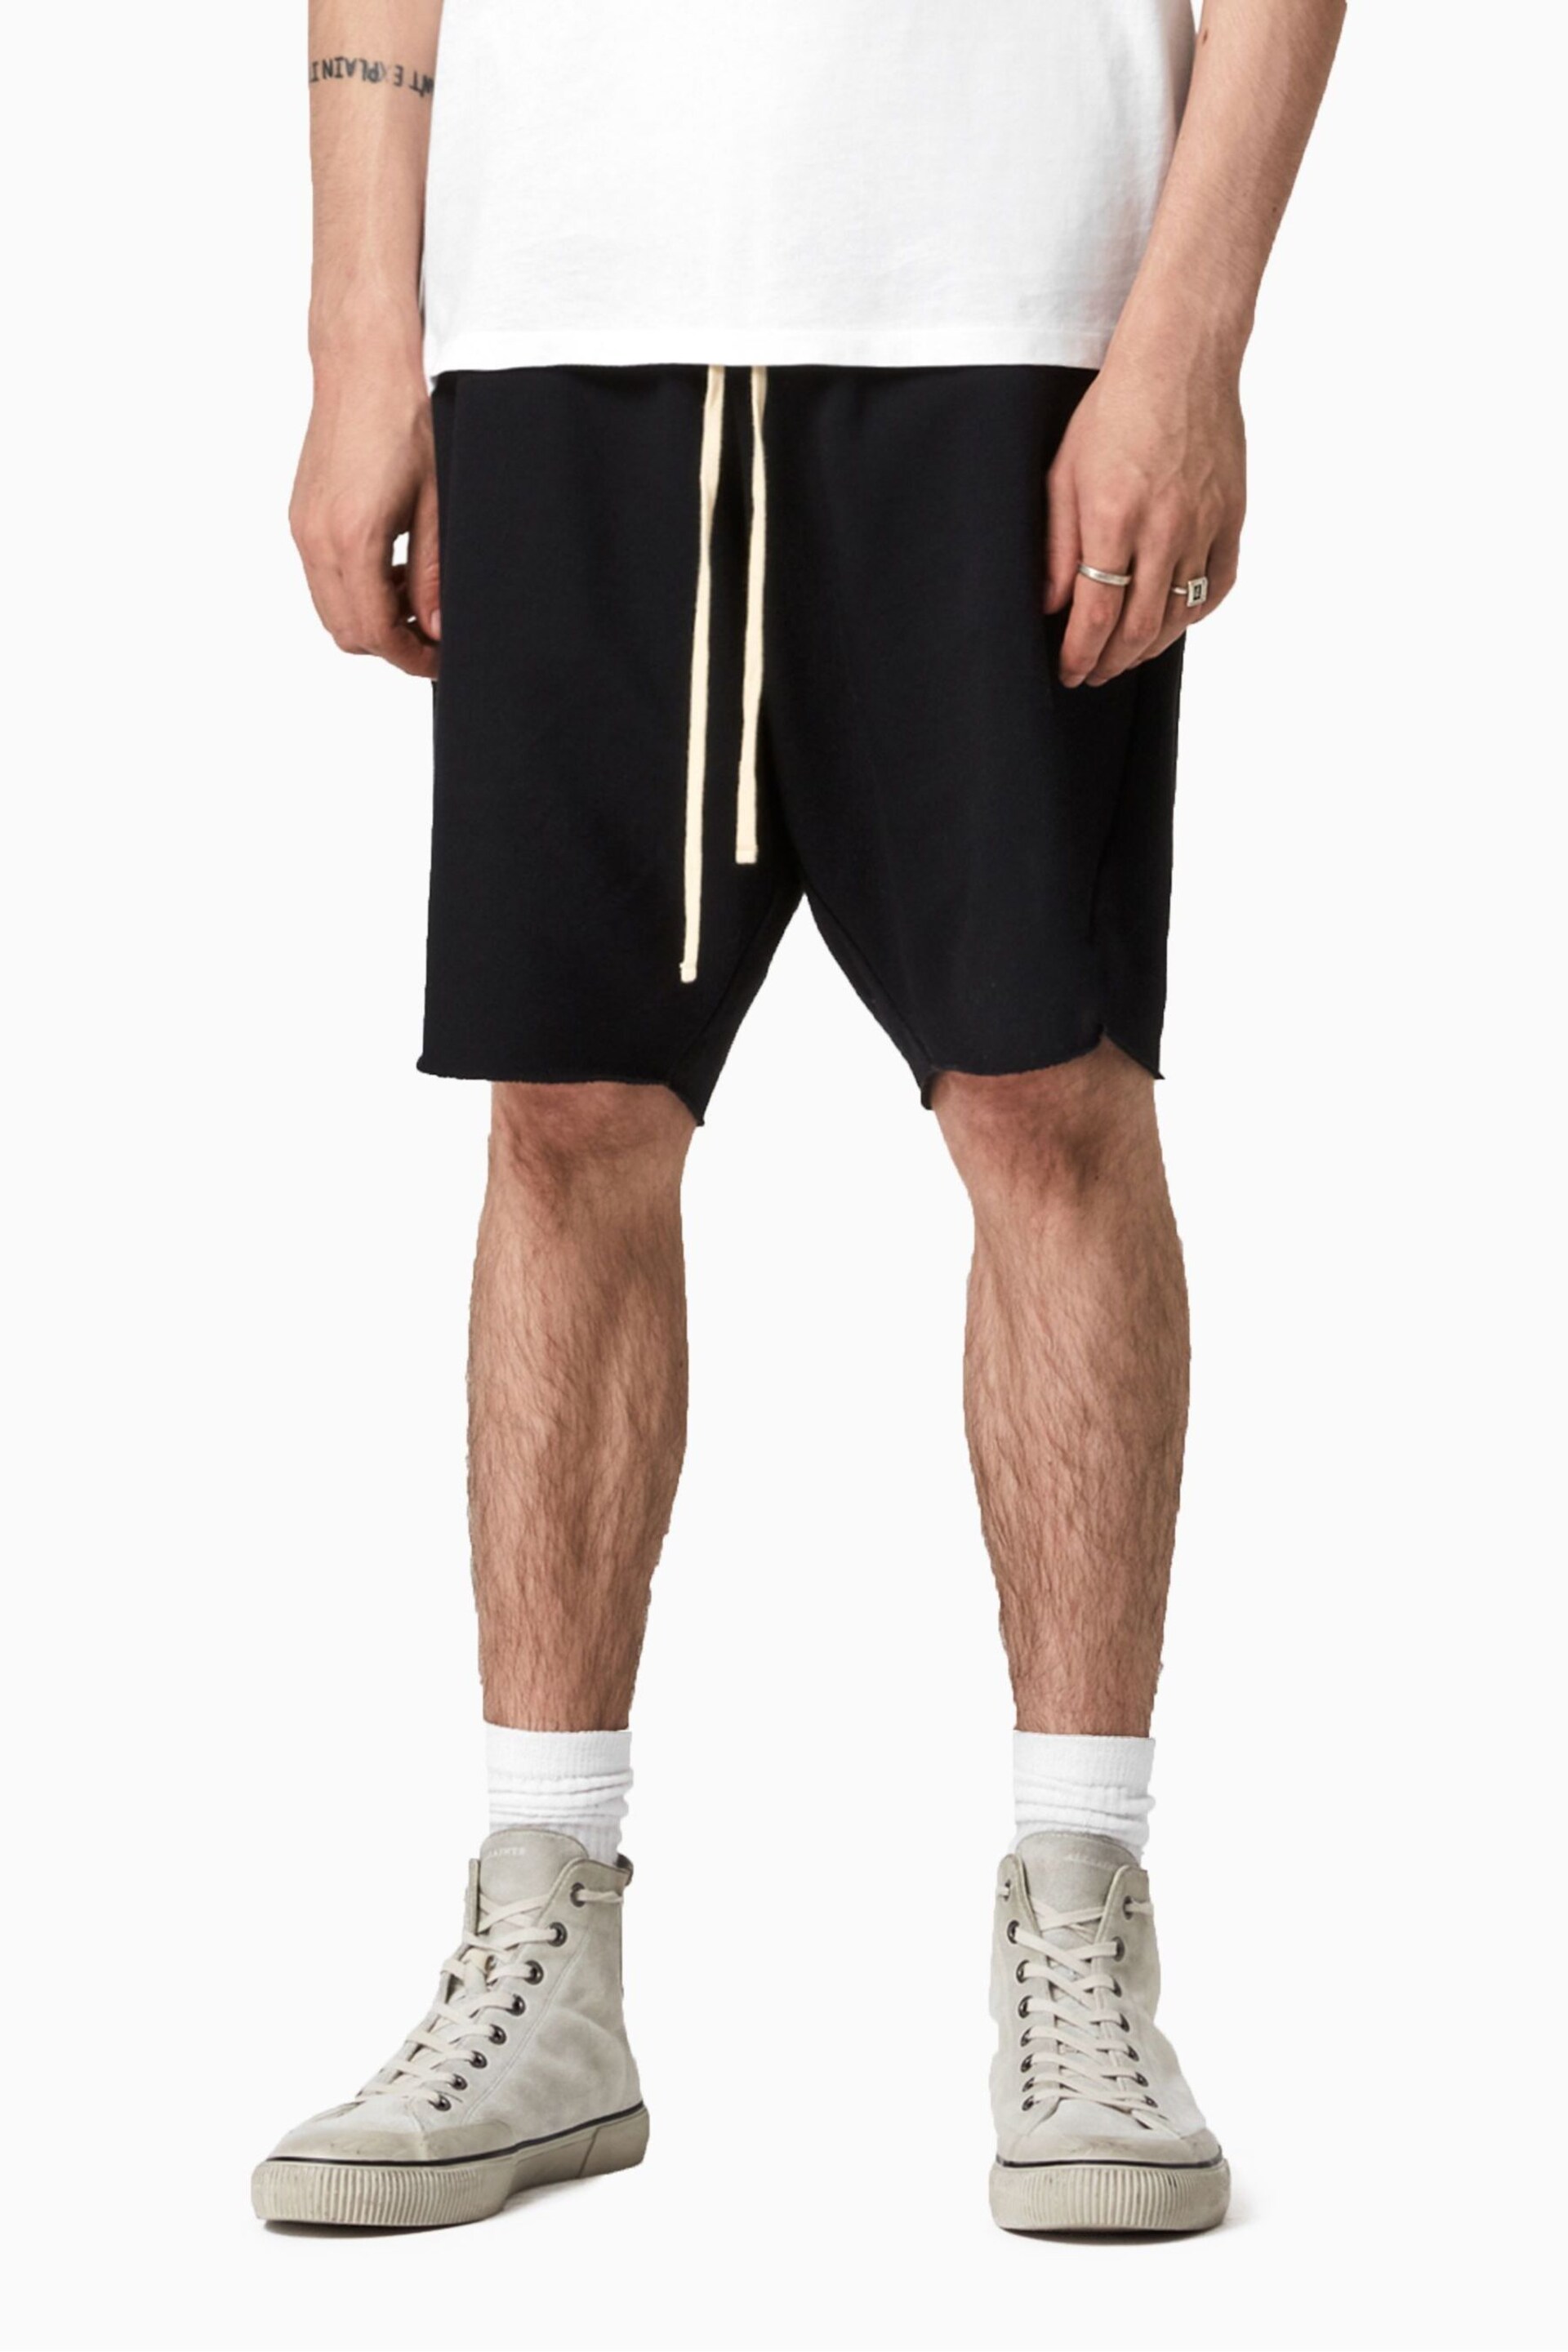 AllSaints Black Helix Shorts - Image 1 of 7